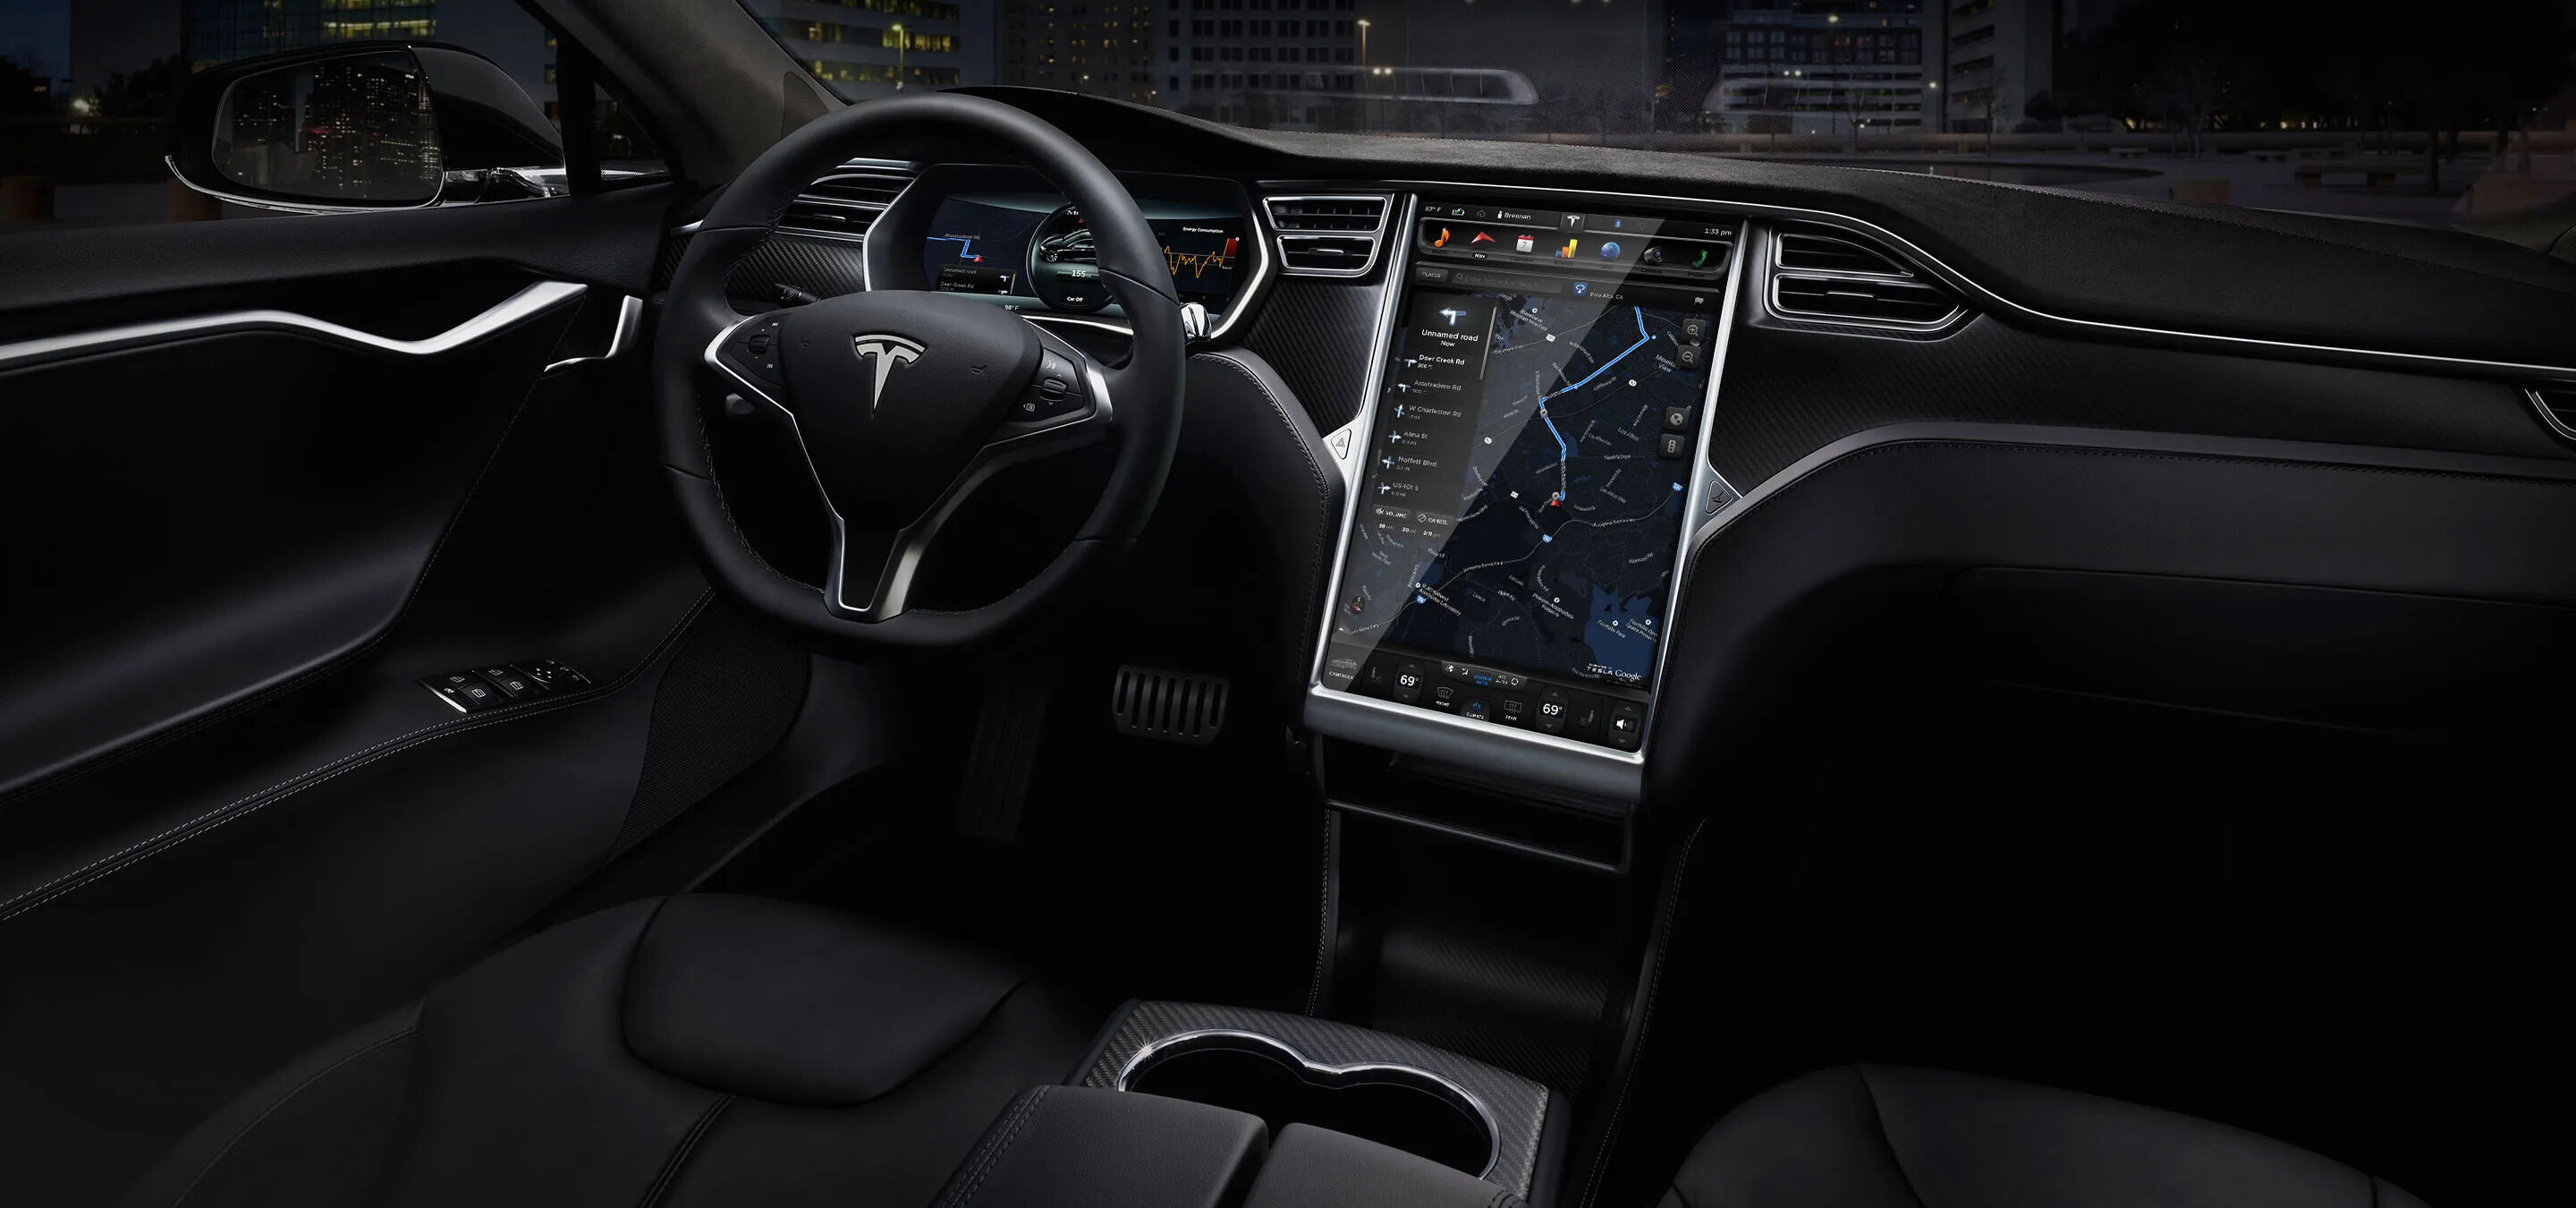 Tesla Connectivity: Enabling Hotspot Tutorial